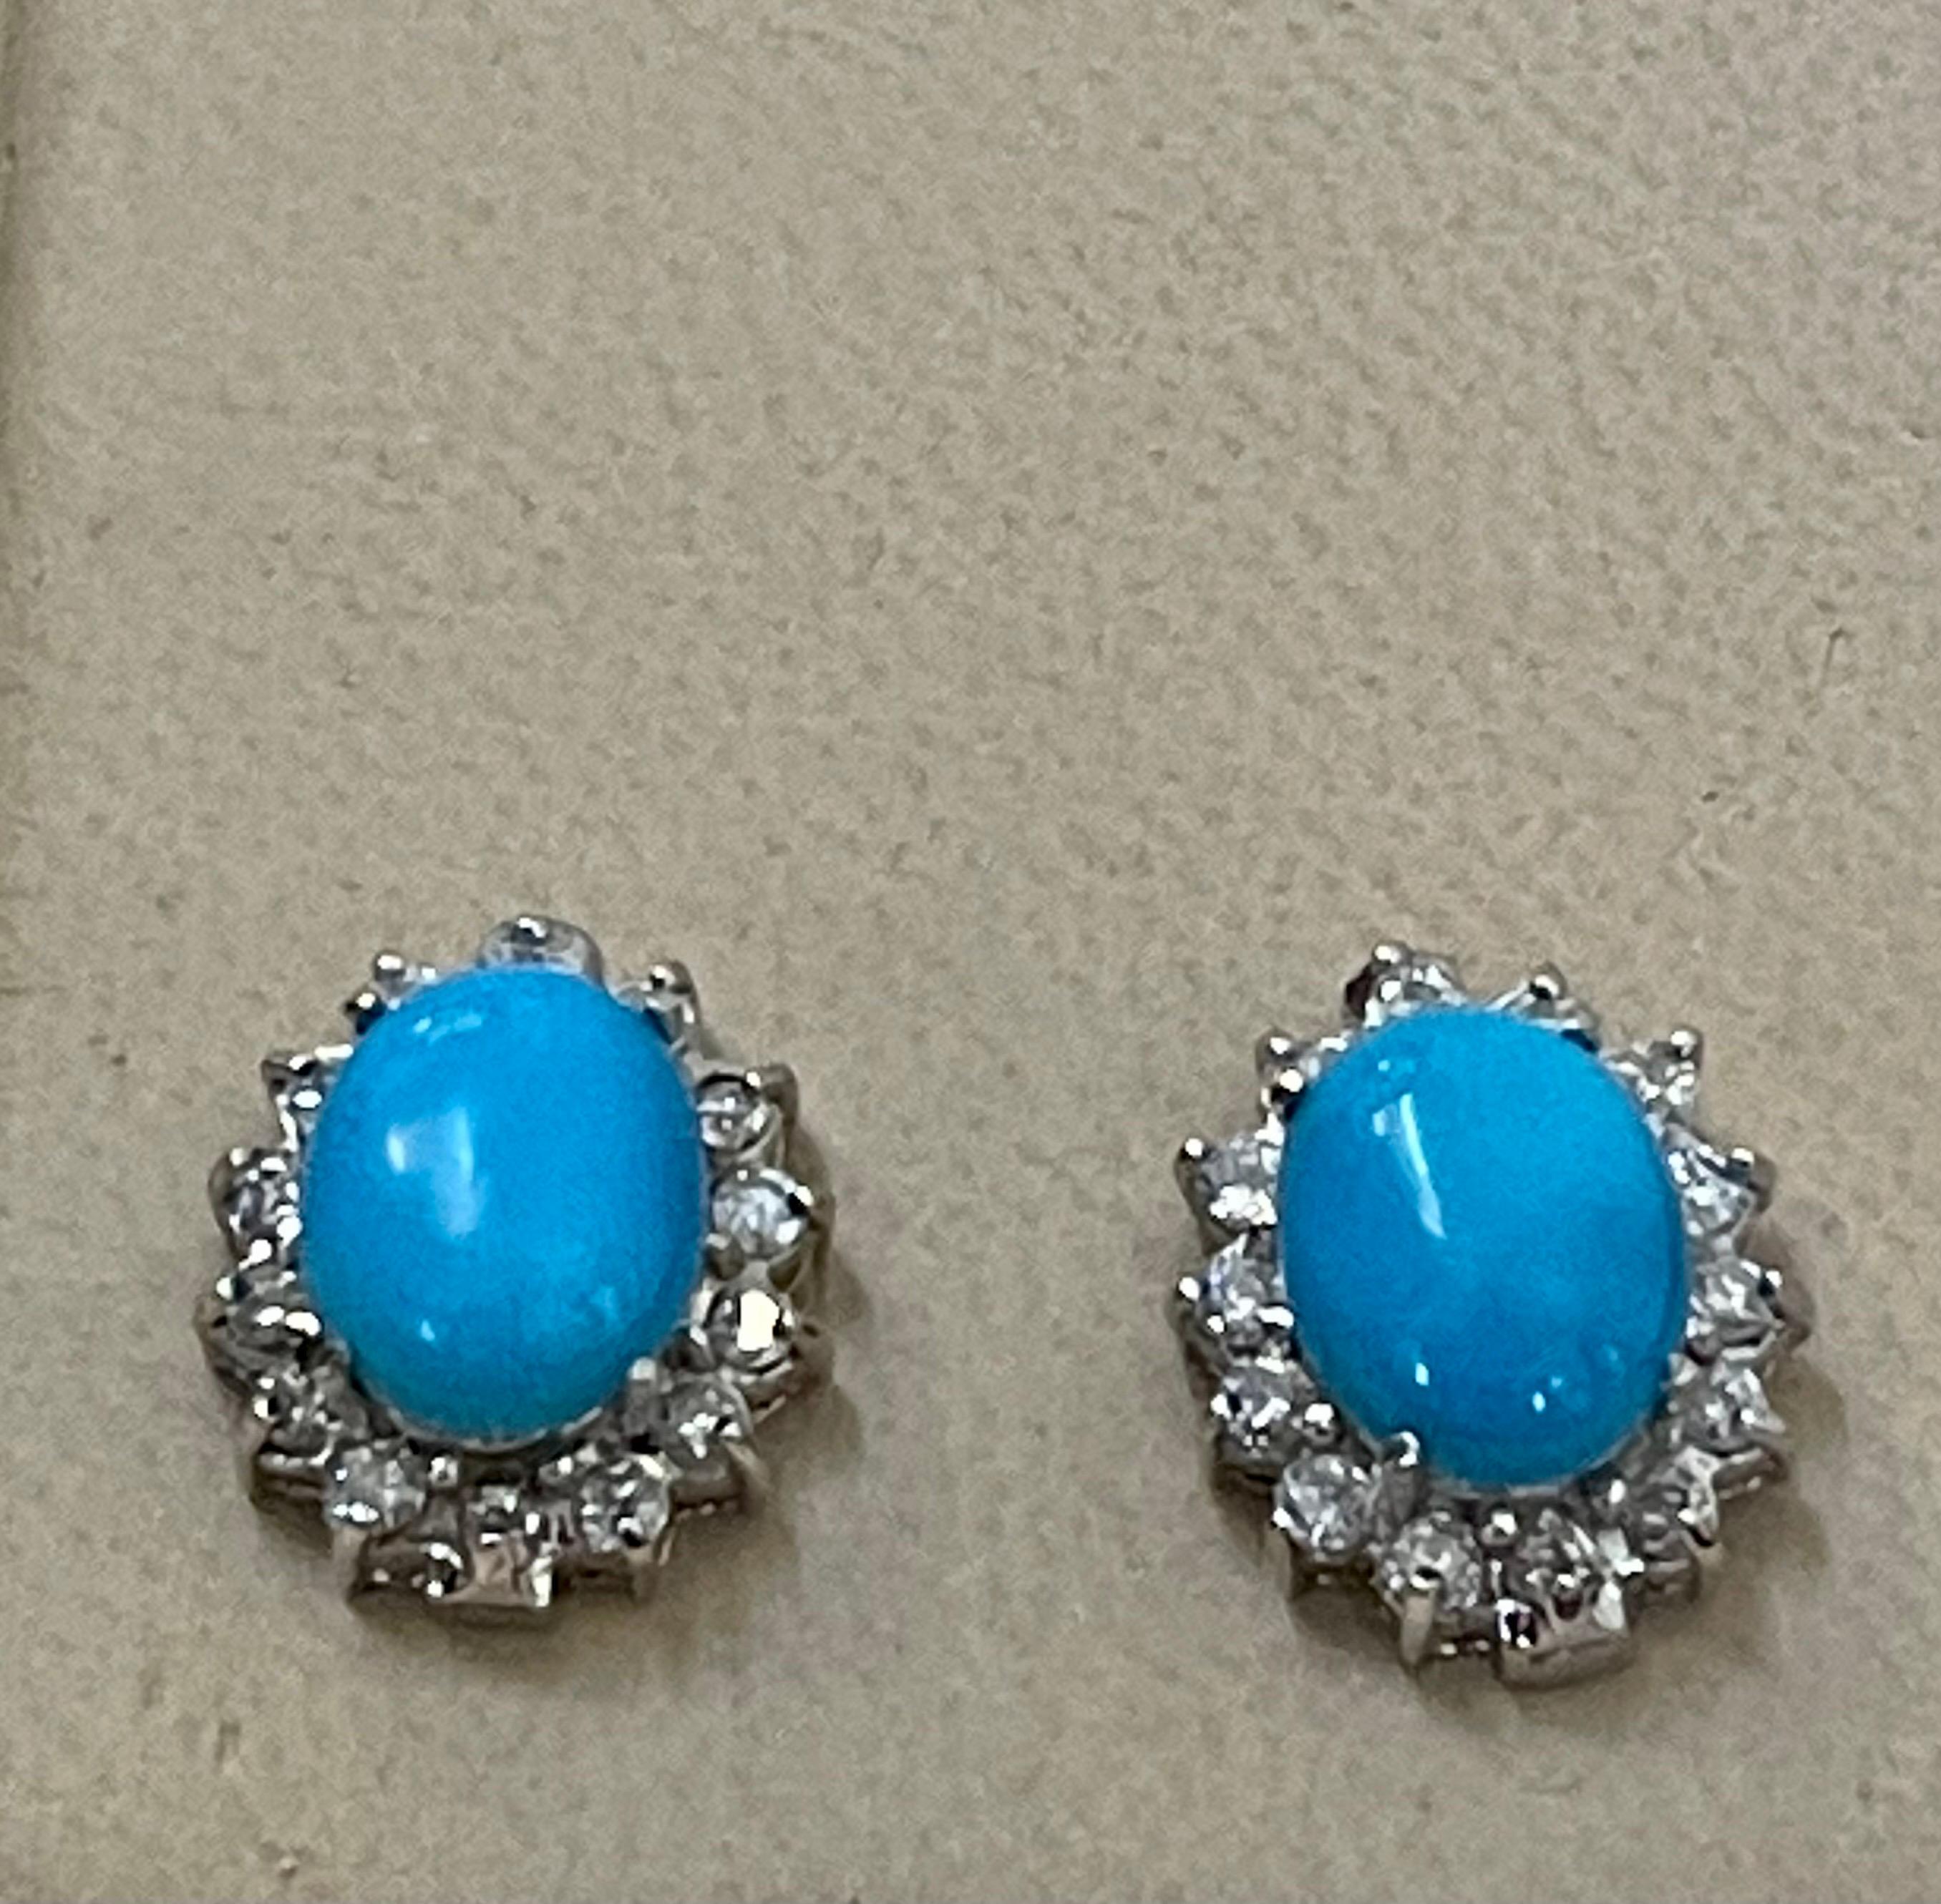 8 Ct Oval Sleeping Beauty Turquoise & 1 Ct Diamond Stud Earrings 14 K White Gold 7